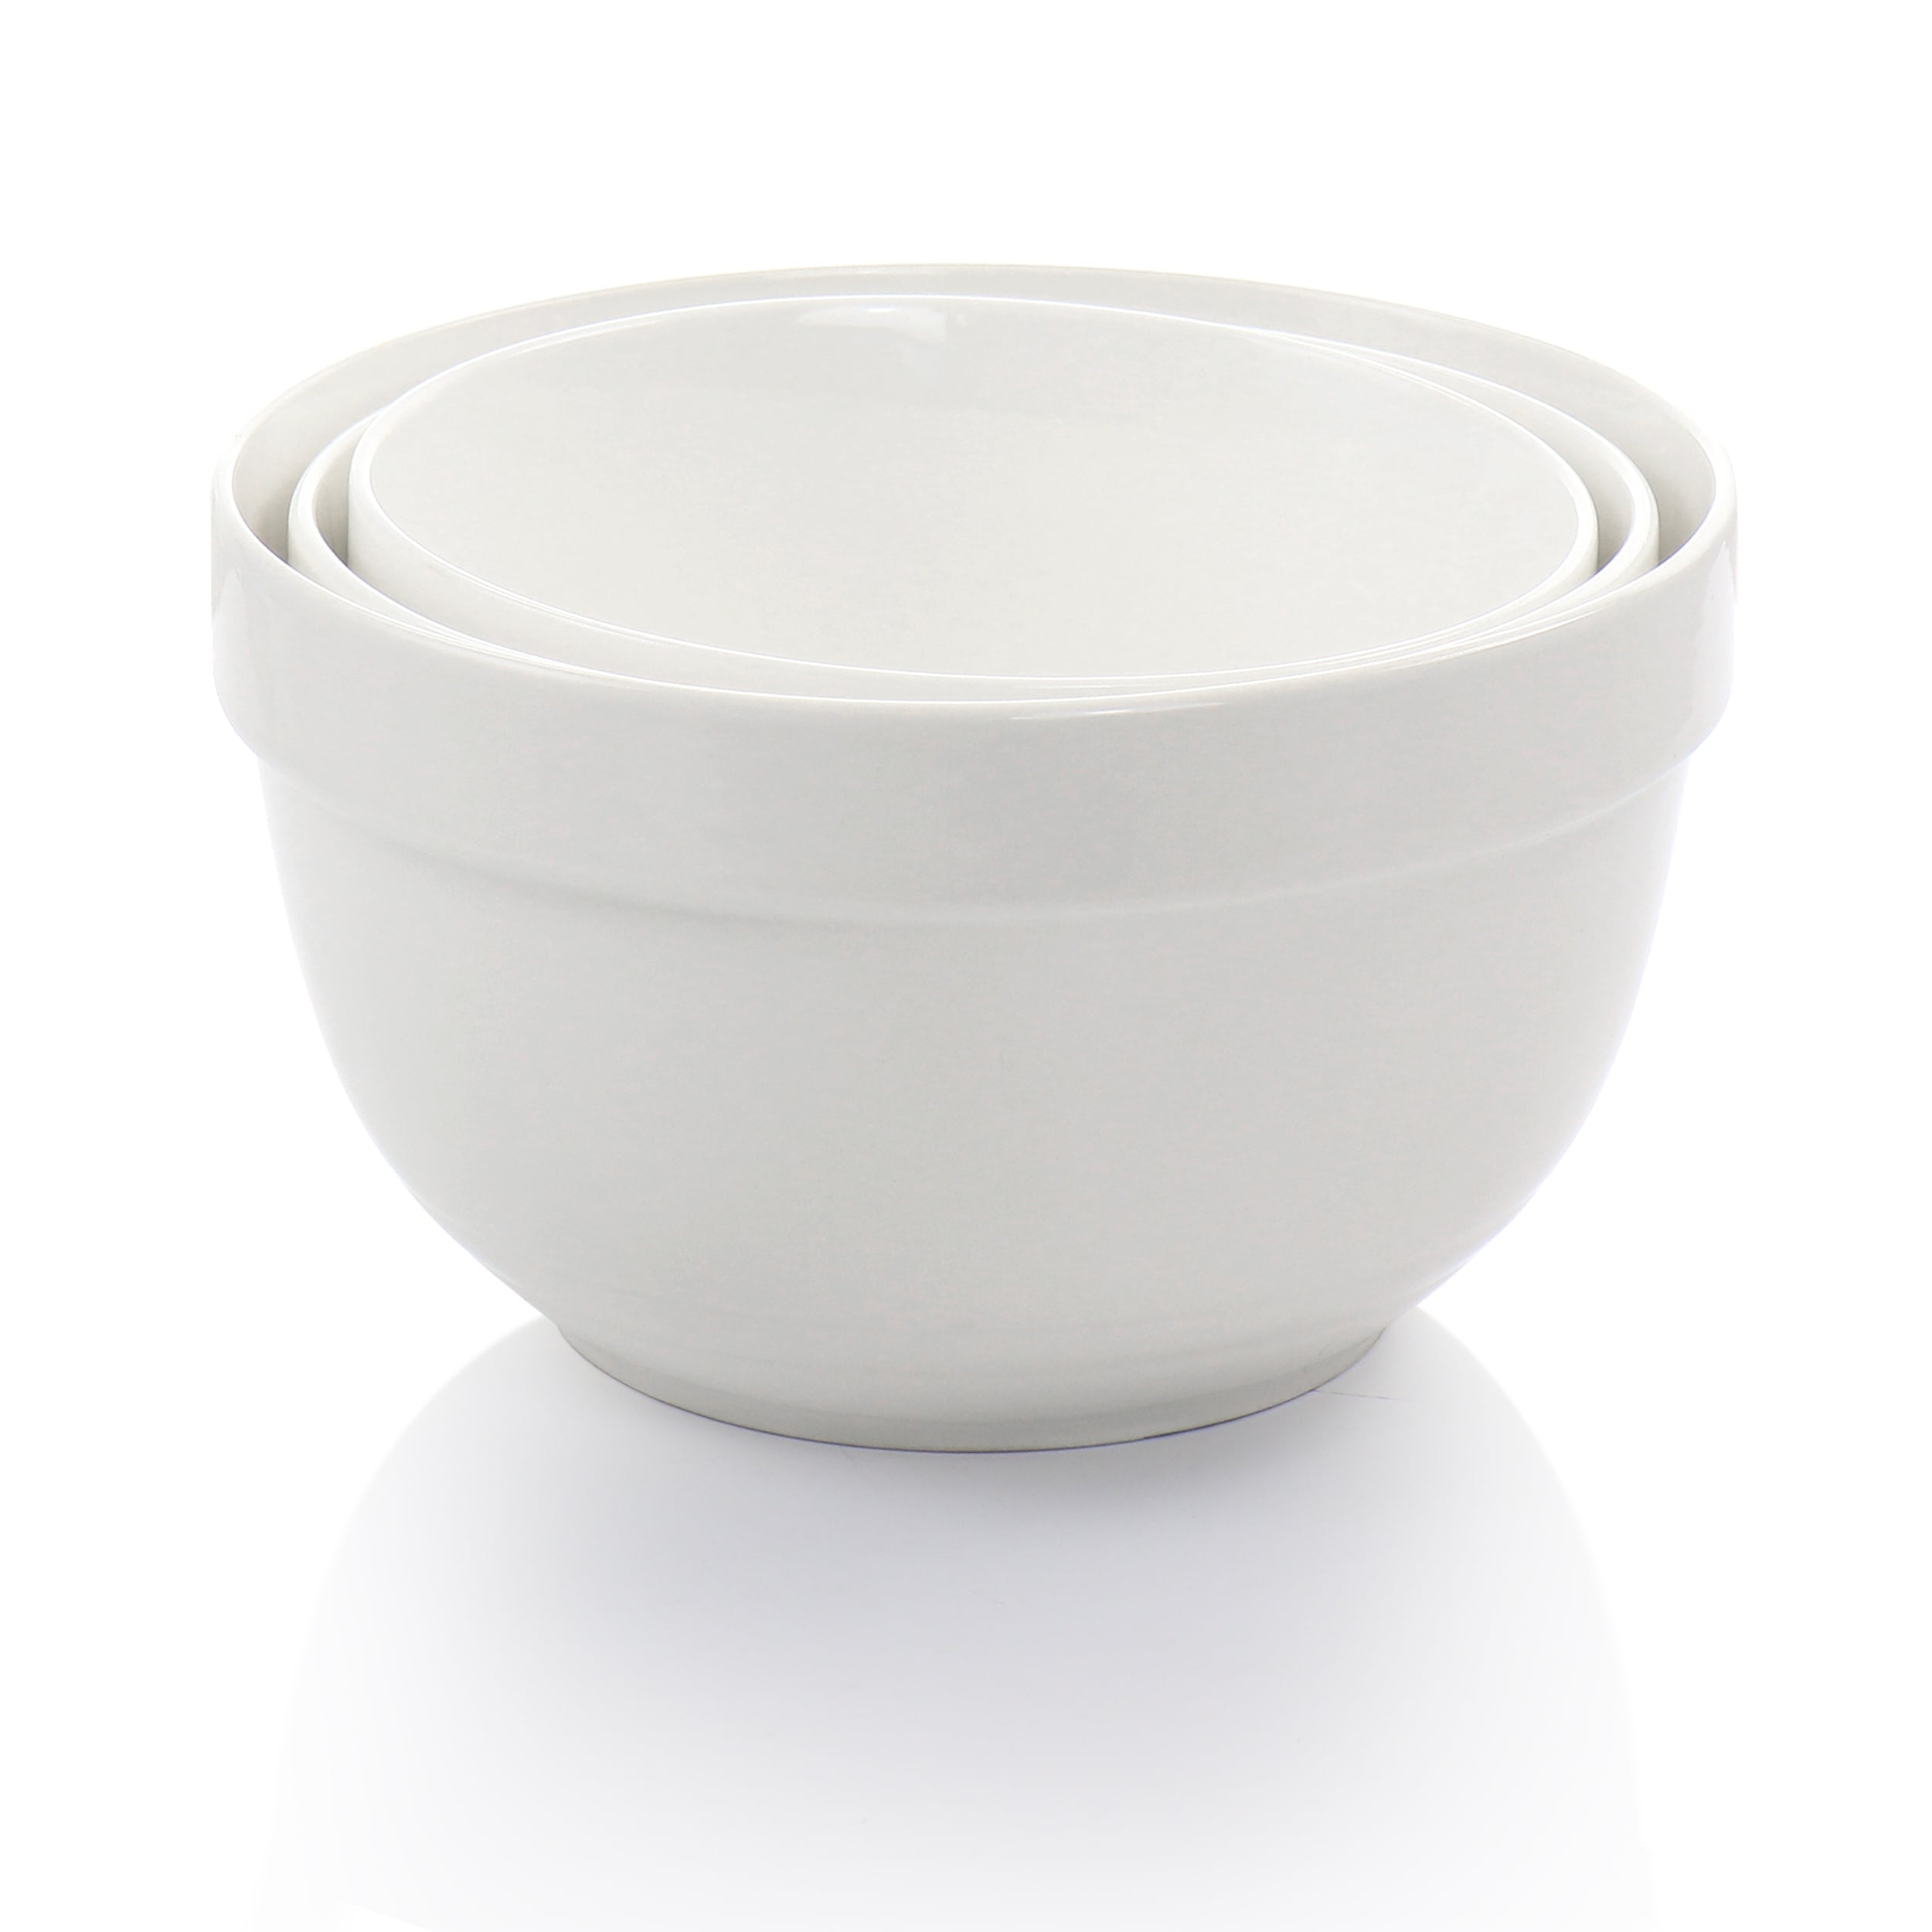 3-piece Nesting Bowl Setset of 3 Ceramic Bowlstwilight Blue